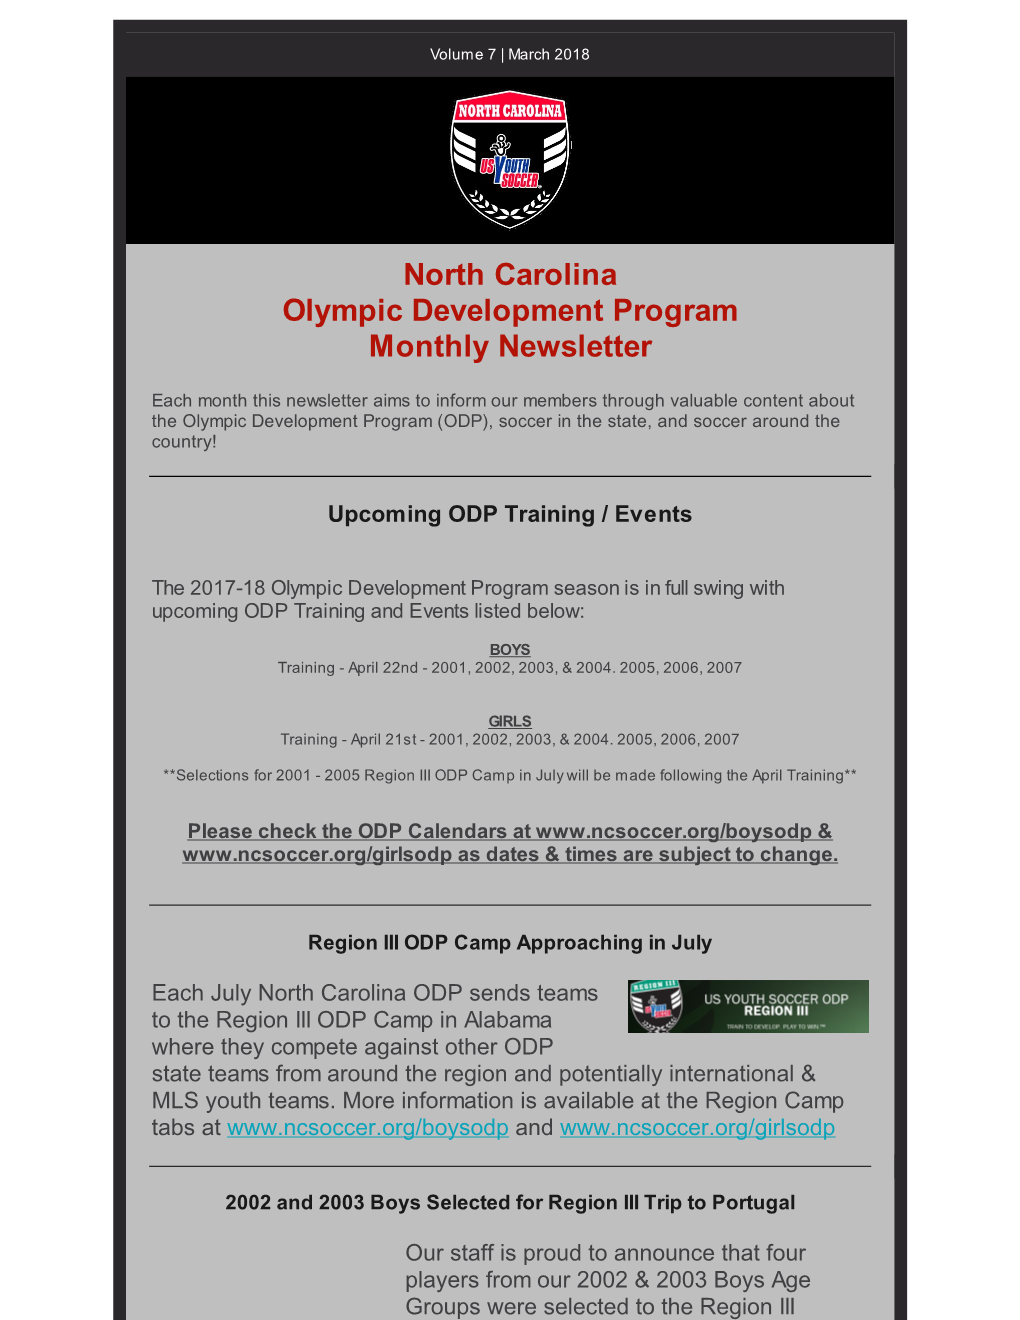 North Carolina Olympic Development Program Monthly Newsletter